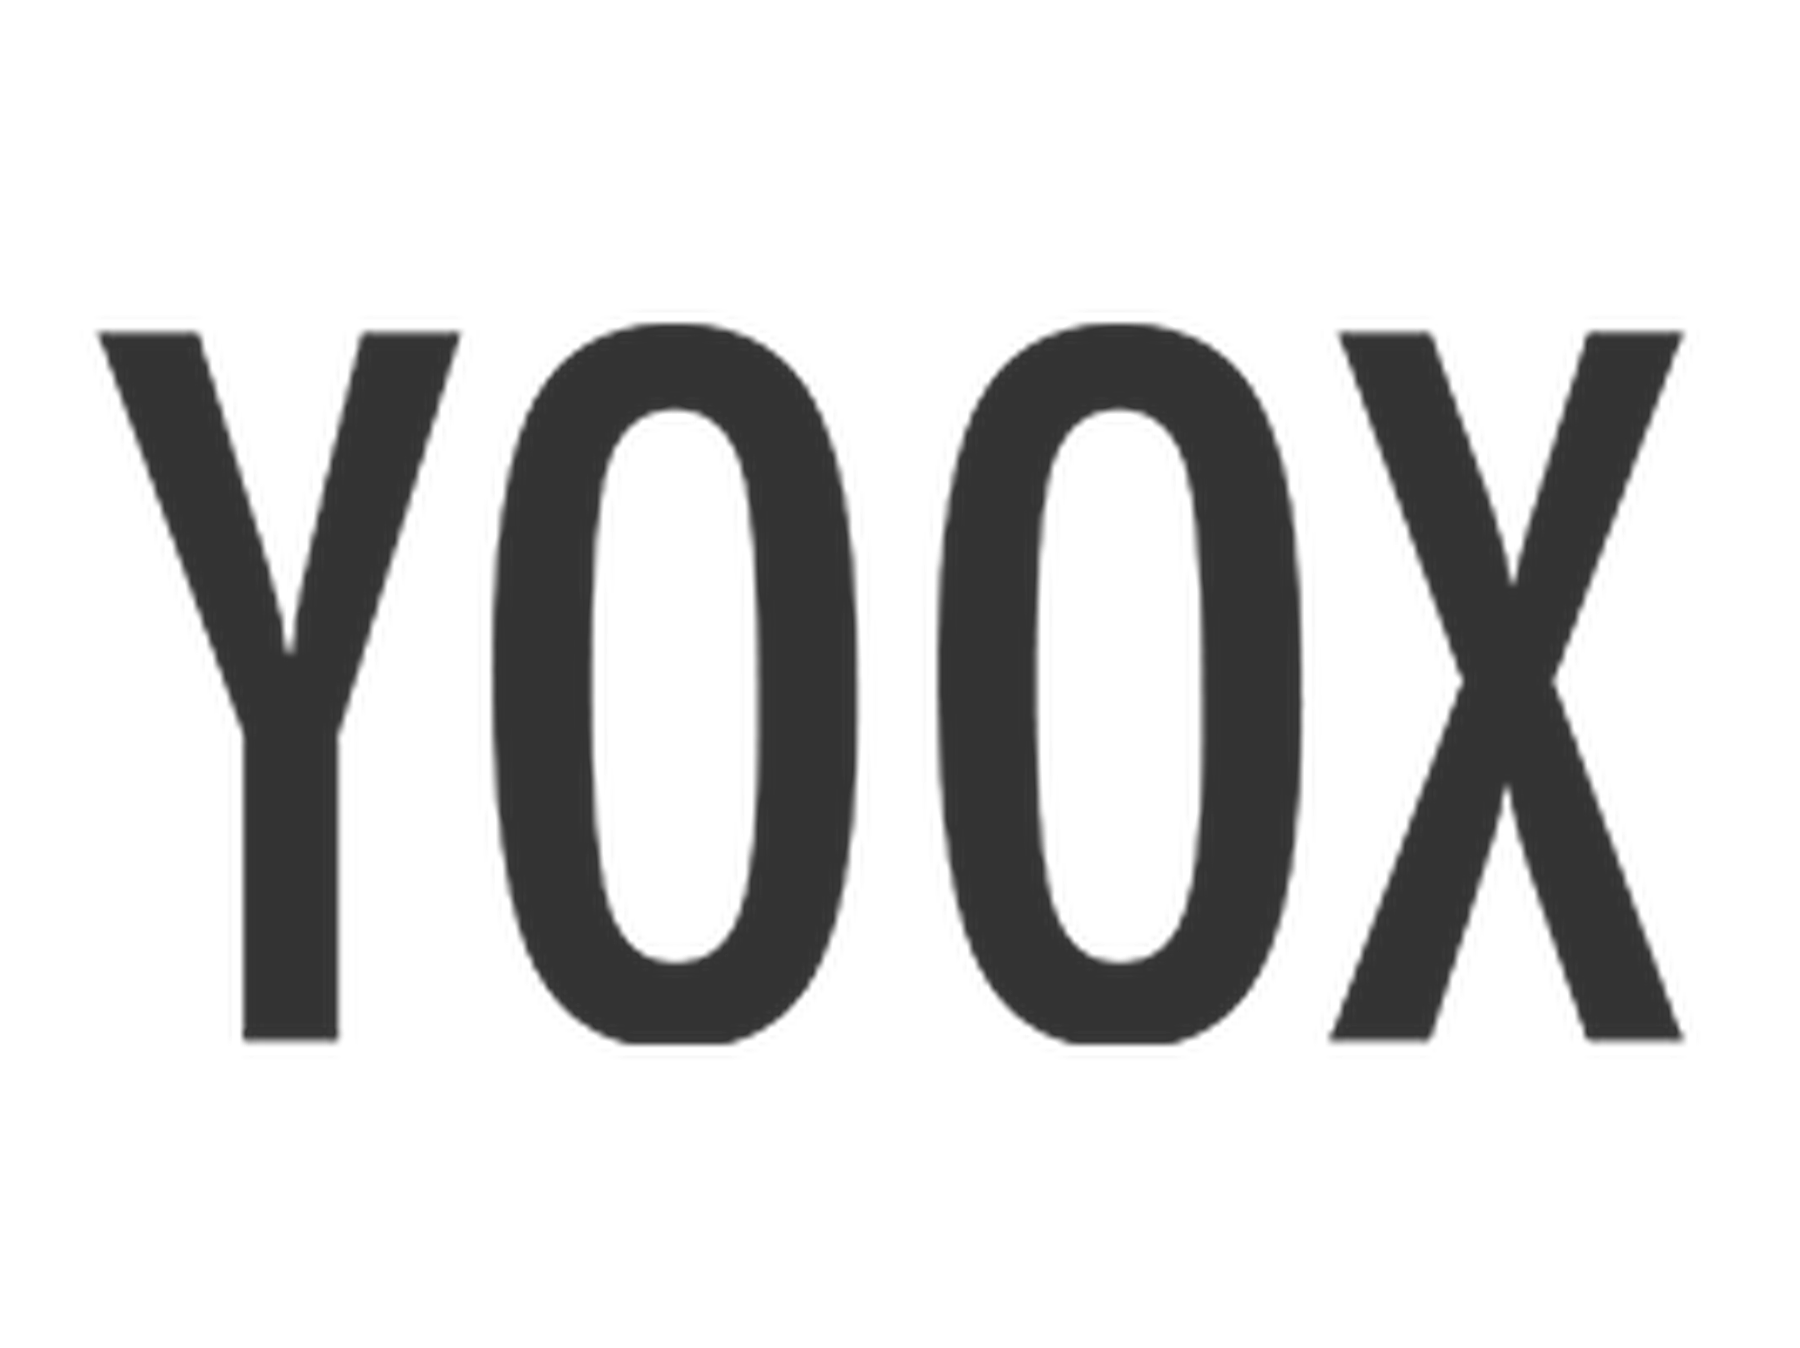 YOOX Promo Code